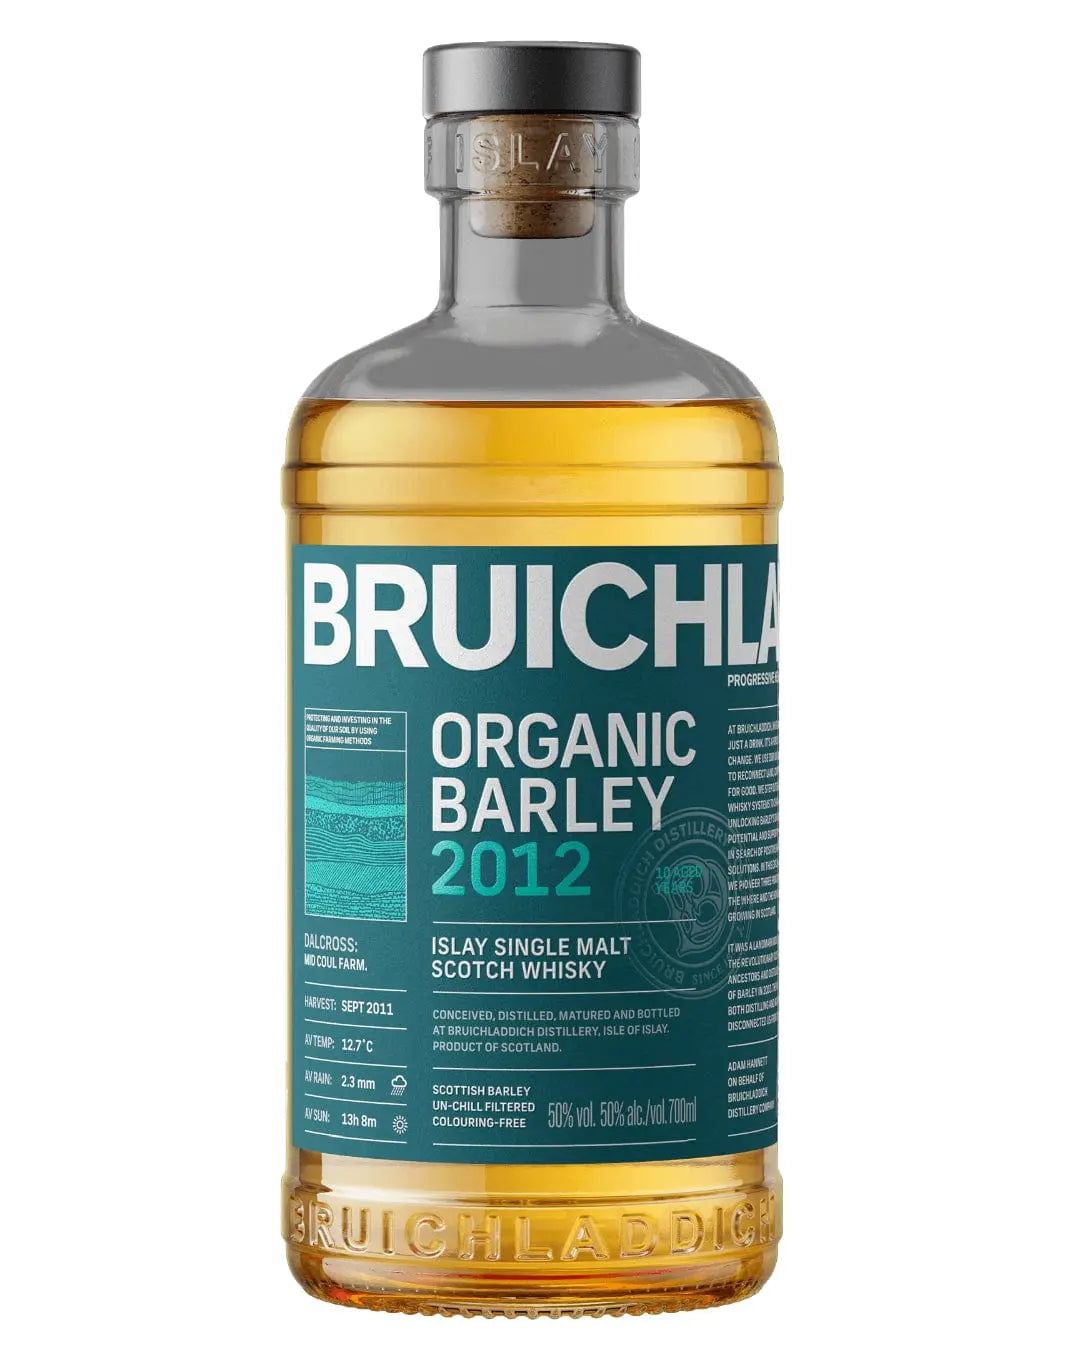 Bruichladdich The Organic 2012 Barley Scotch Whisky, 70 cl Whisky